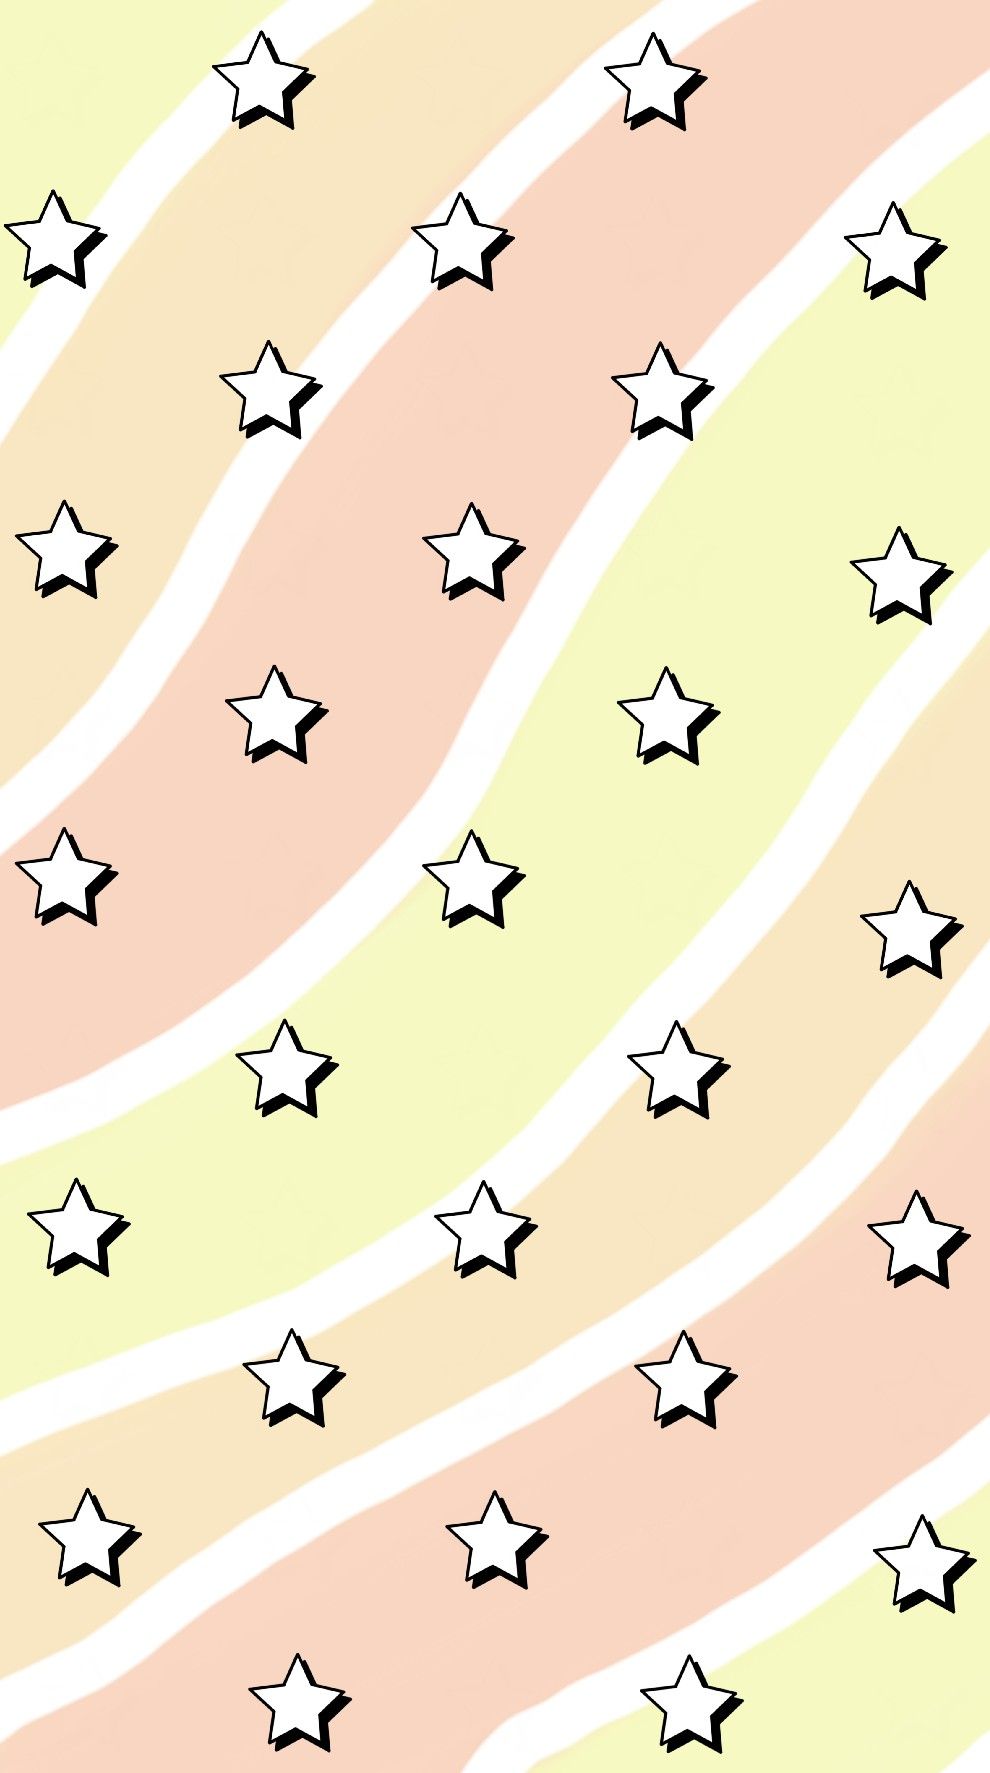 Aesthetic star wallpaper. This image has copyright. Phone wallpaper, iPhone wallpaper, iPhone background wallpaper